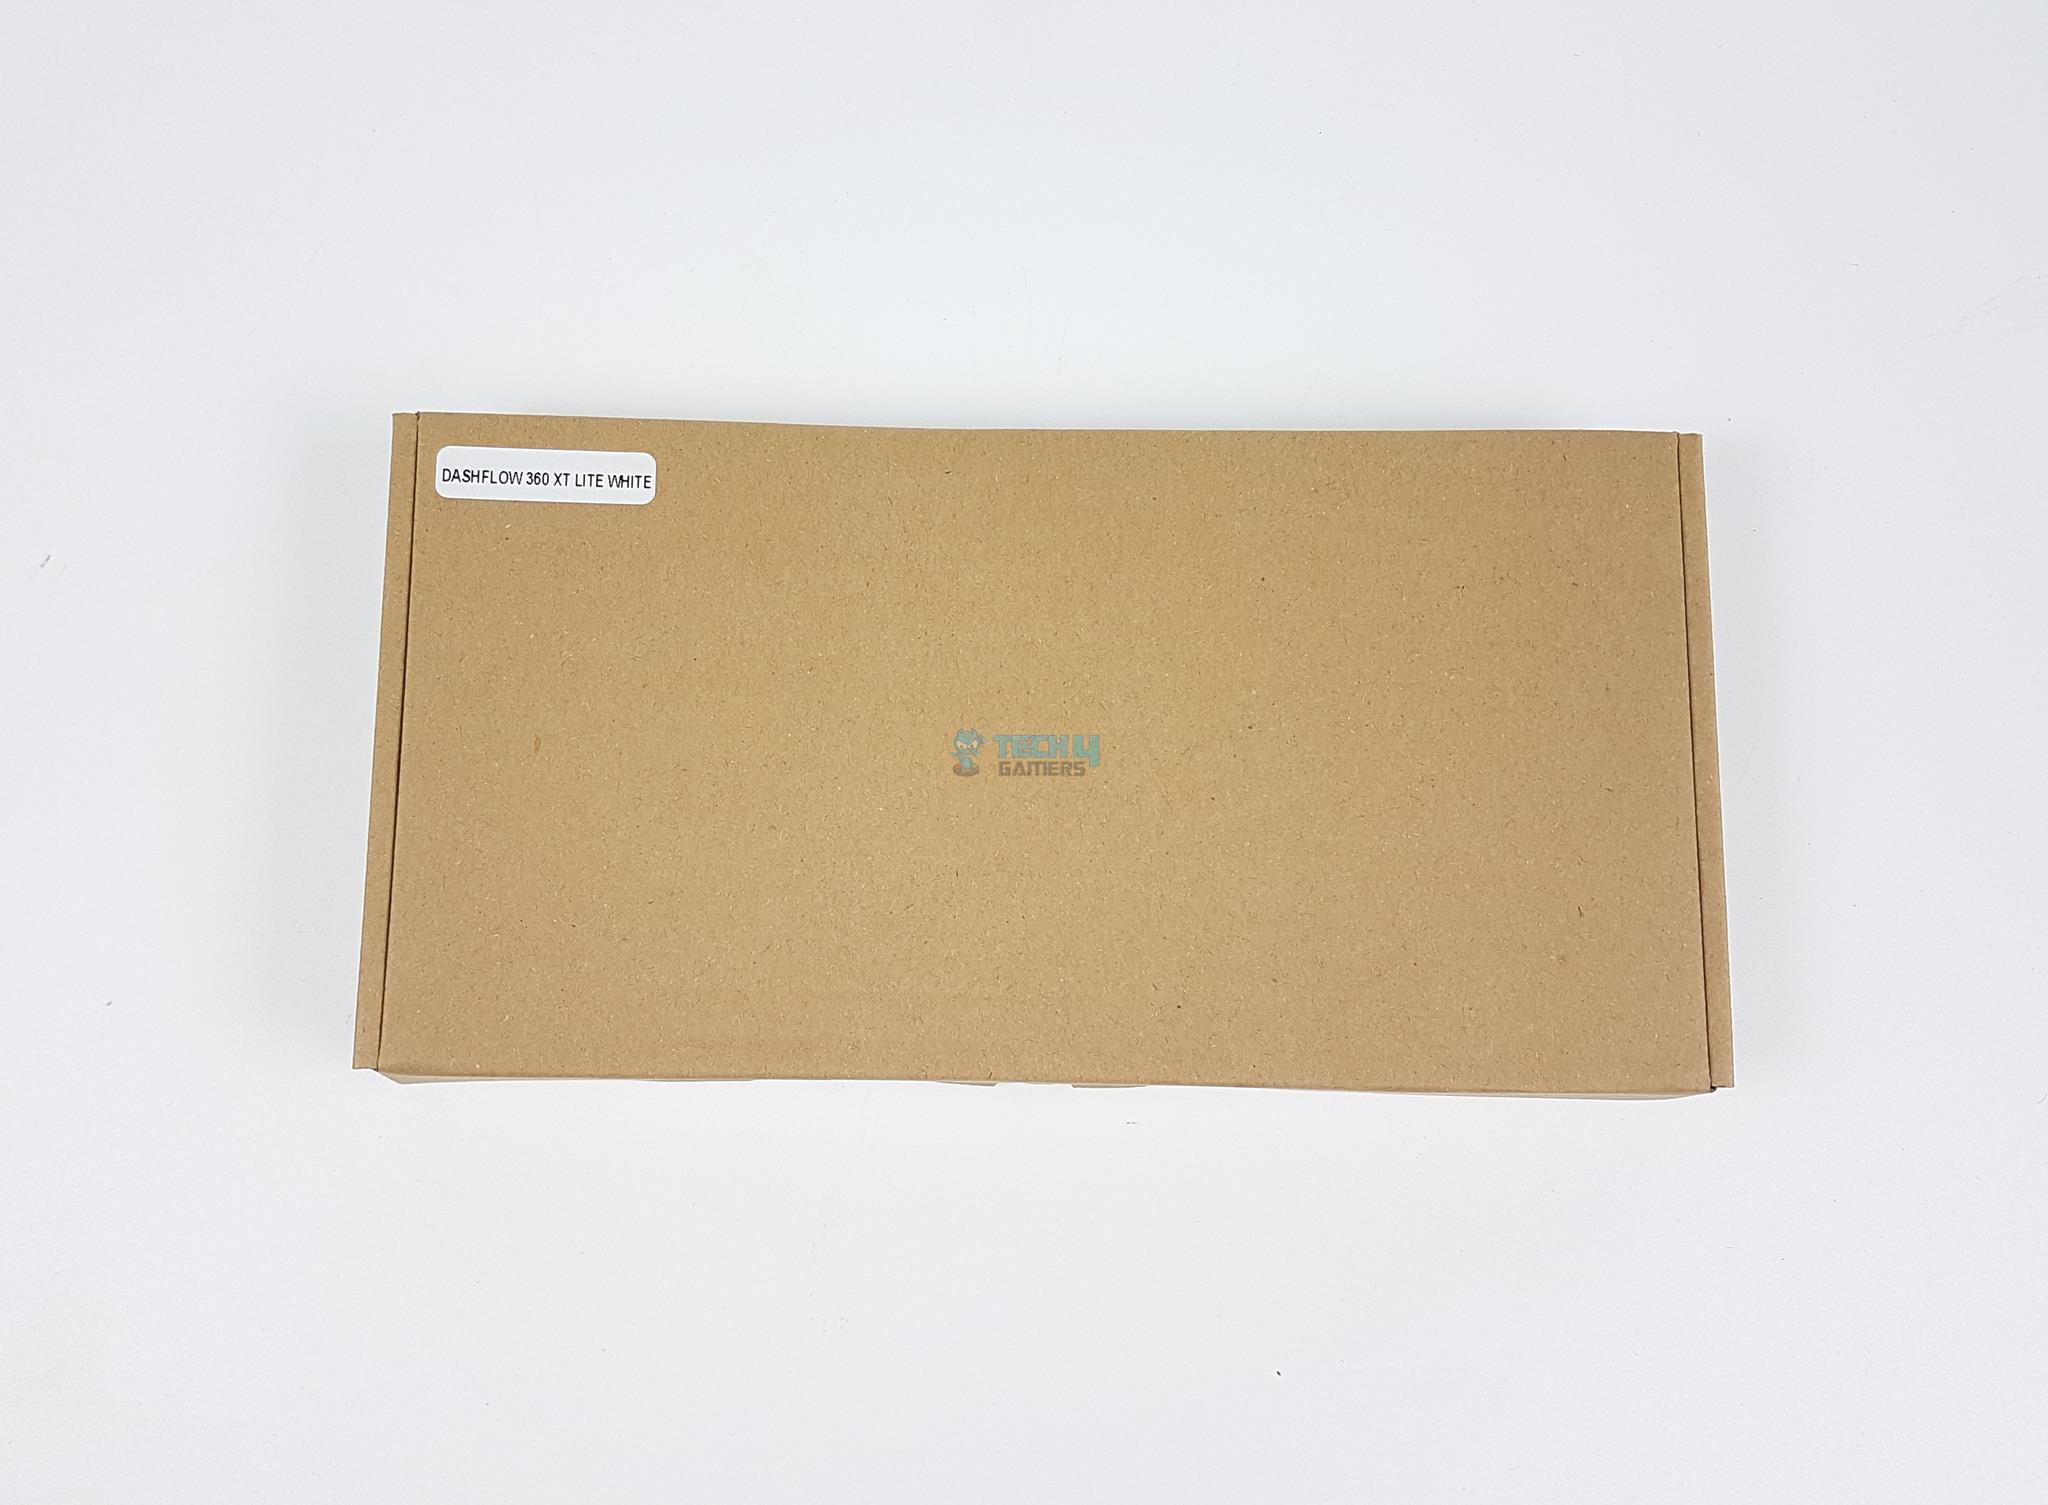 ID-COOLING DASHFLOW 360 XT LITE White Cooler — Packing Box 5